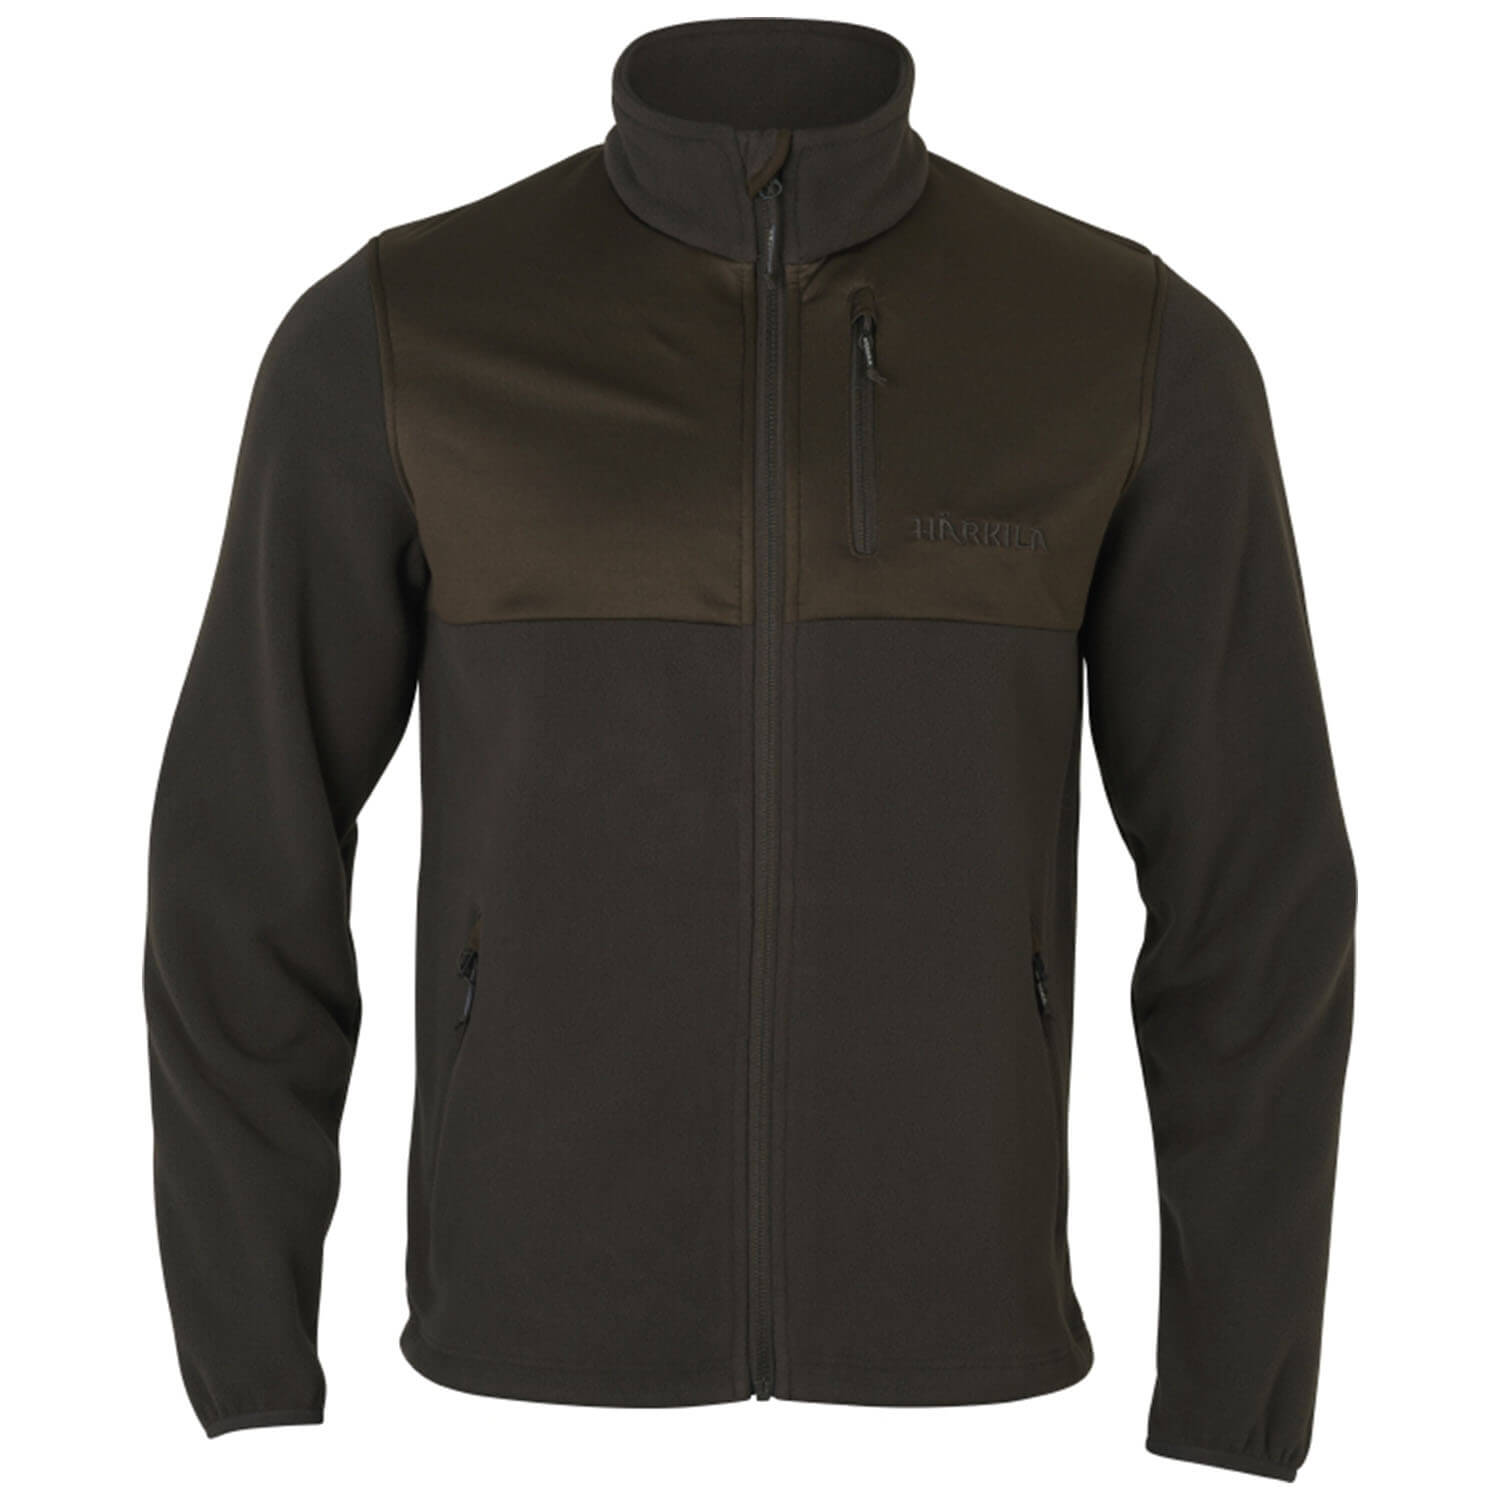 Härkila fleece jacket Steinn (shadow brown)